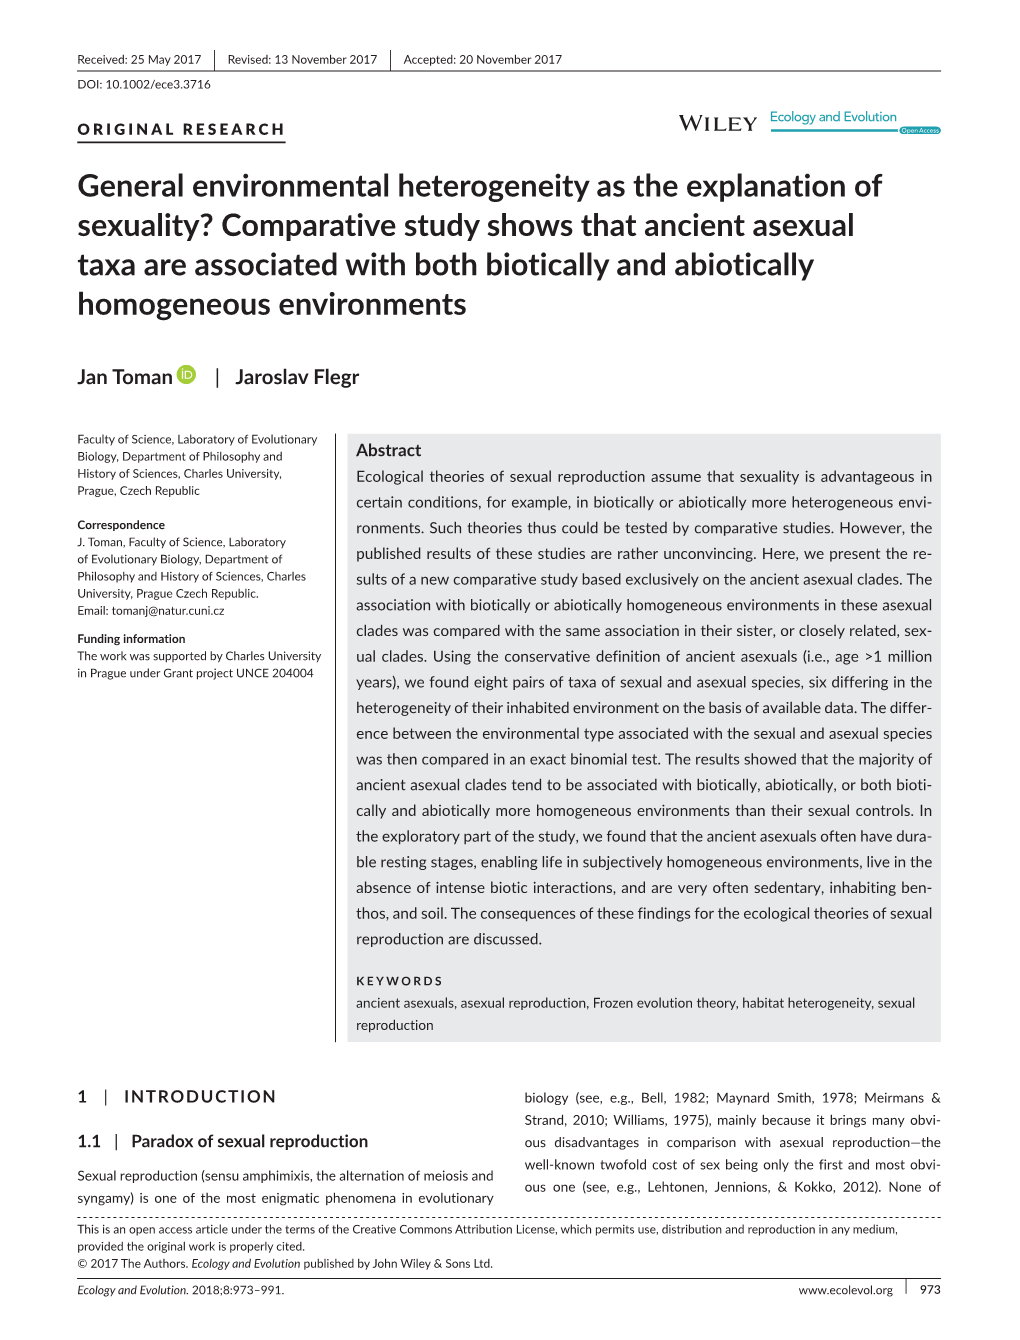 General Environmental Heterogeneity As the Explanation of Sexuality